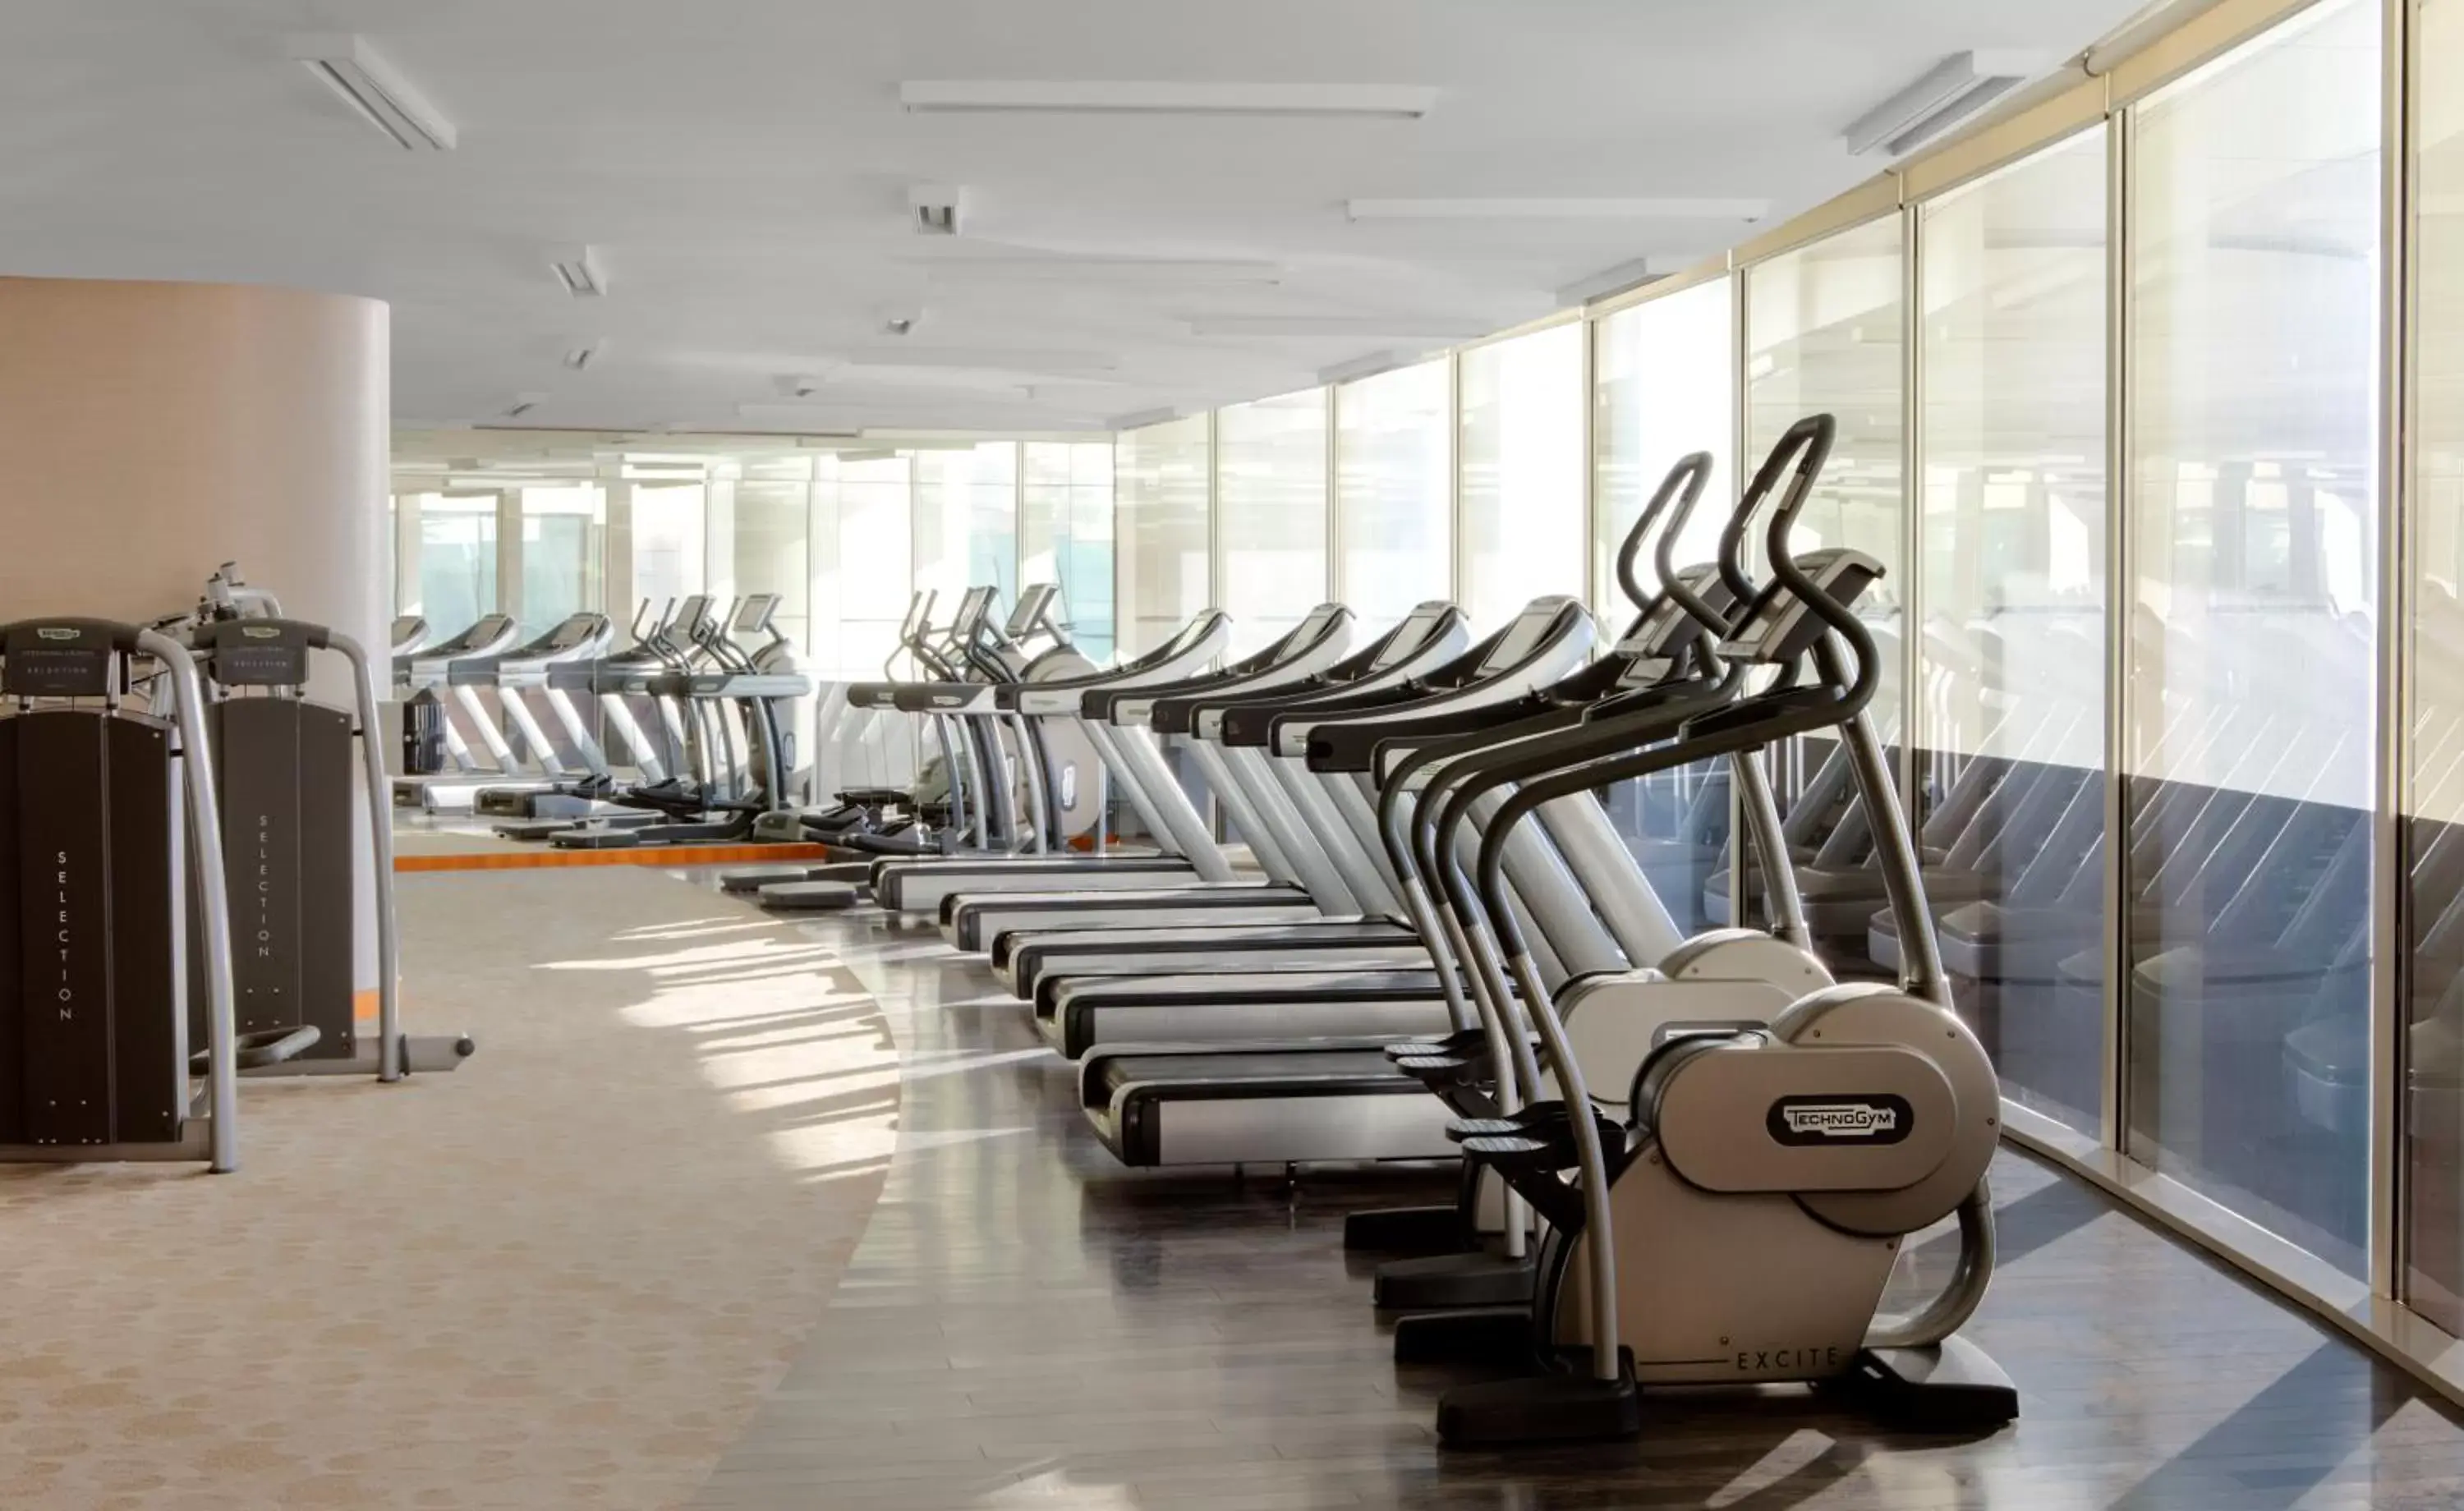 Fitness centre/facilities, Fitness Center/Facilities in Crowne Plaza Dubai Festival City